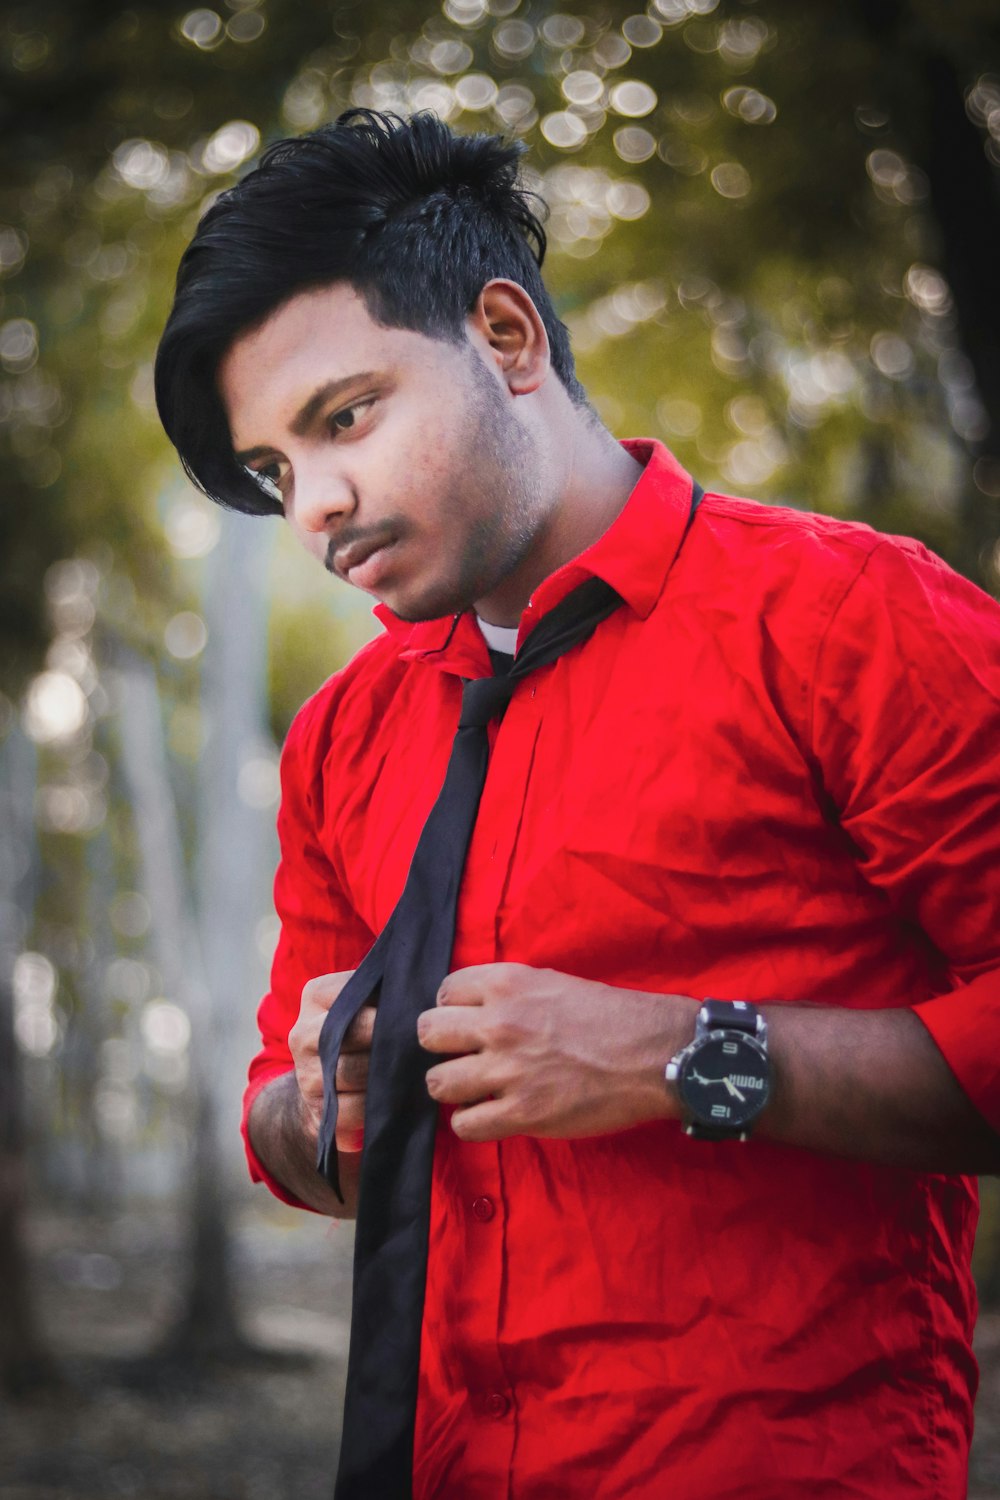 Man wearing red dress shirt and black tie photo – Free Apparel Image on  Unsplash